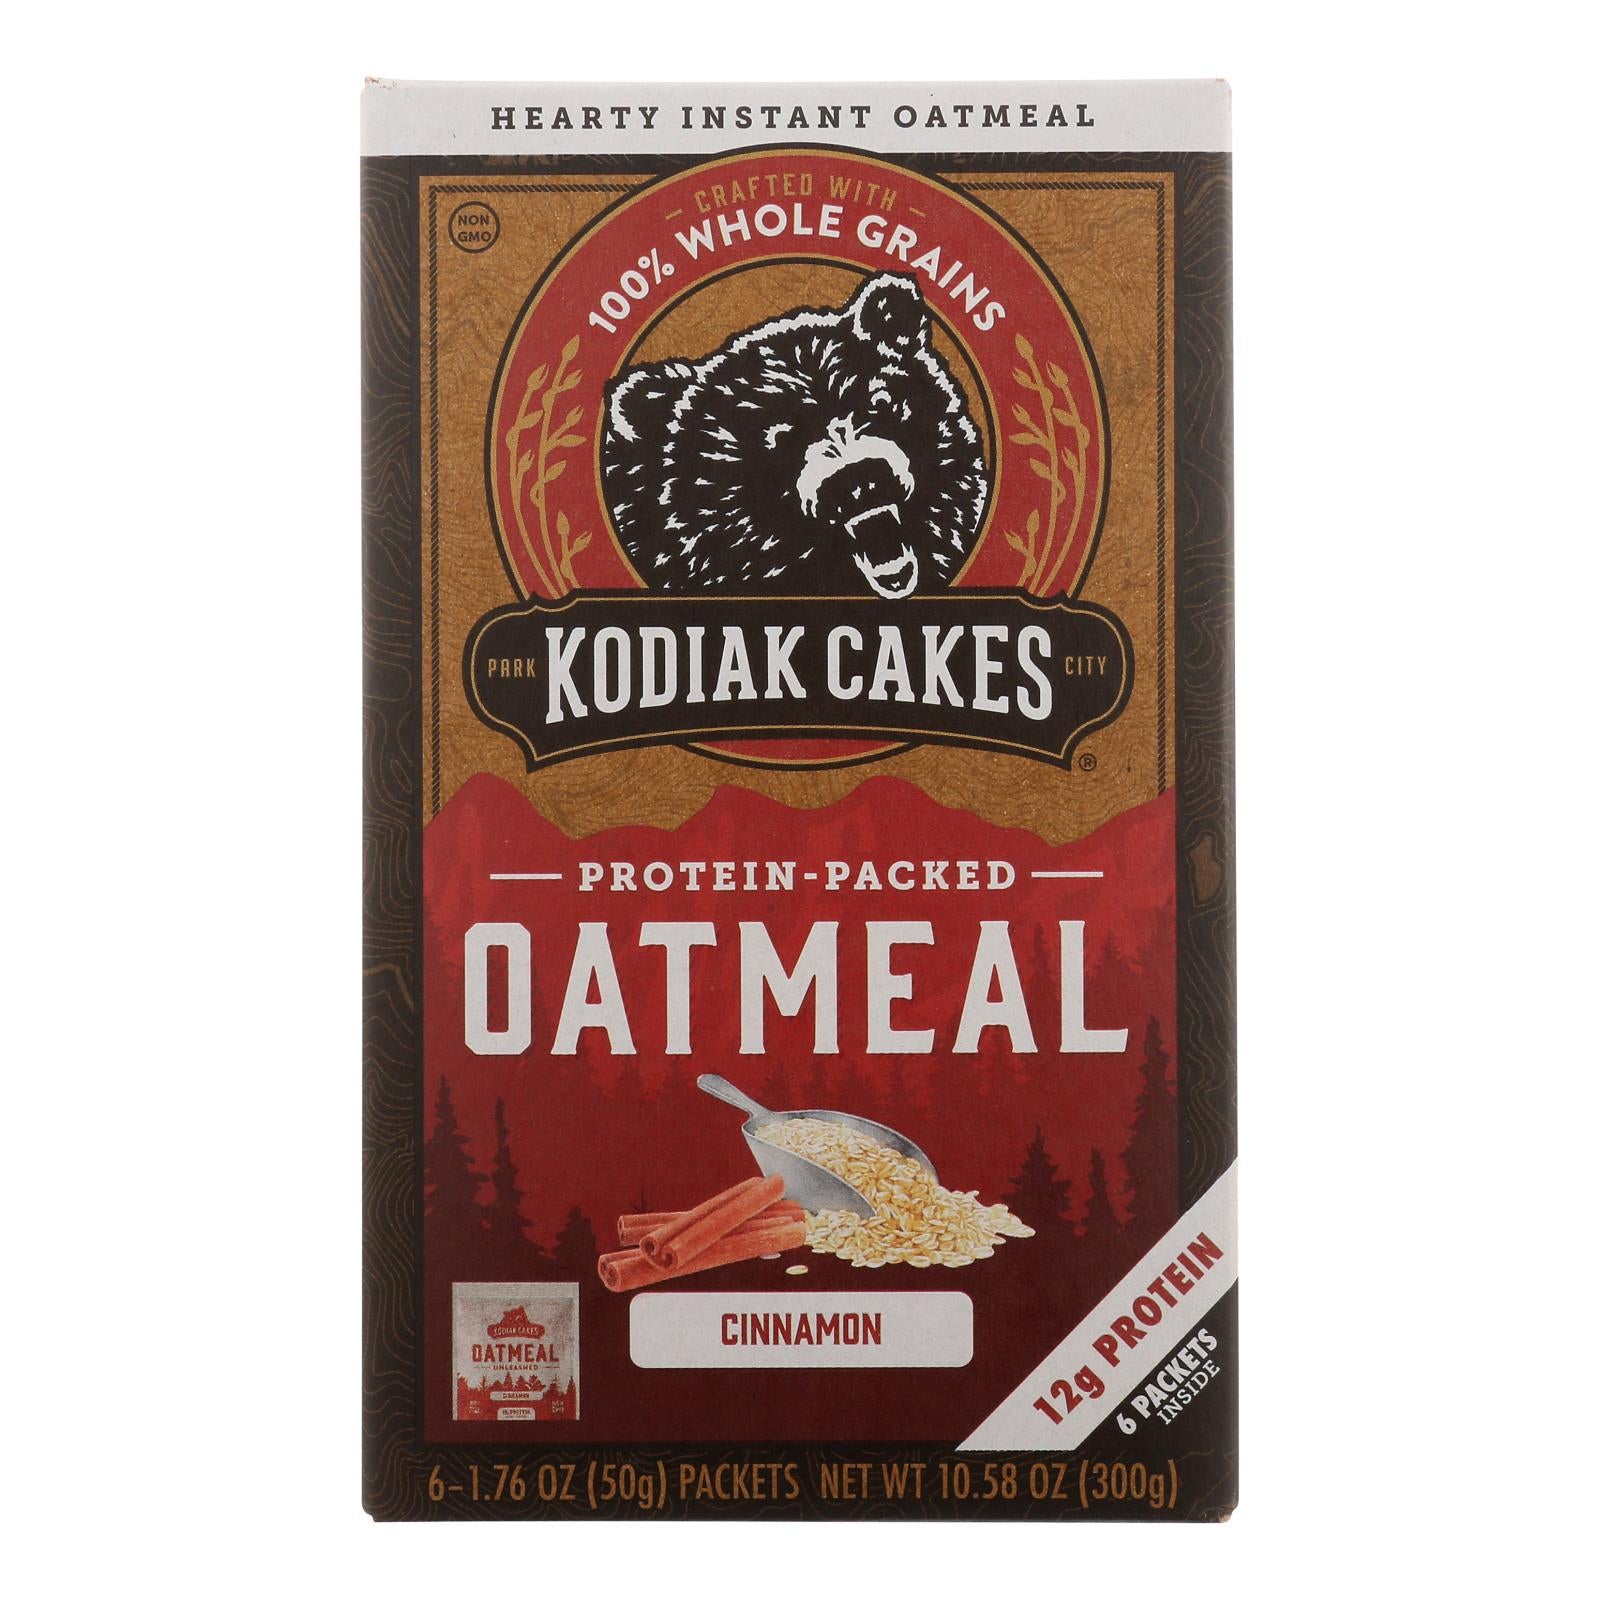 Kodiak Cakes - Oatmeal Cinnamon Packets - CS of 6-6/1.76OZ